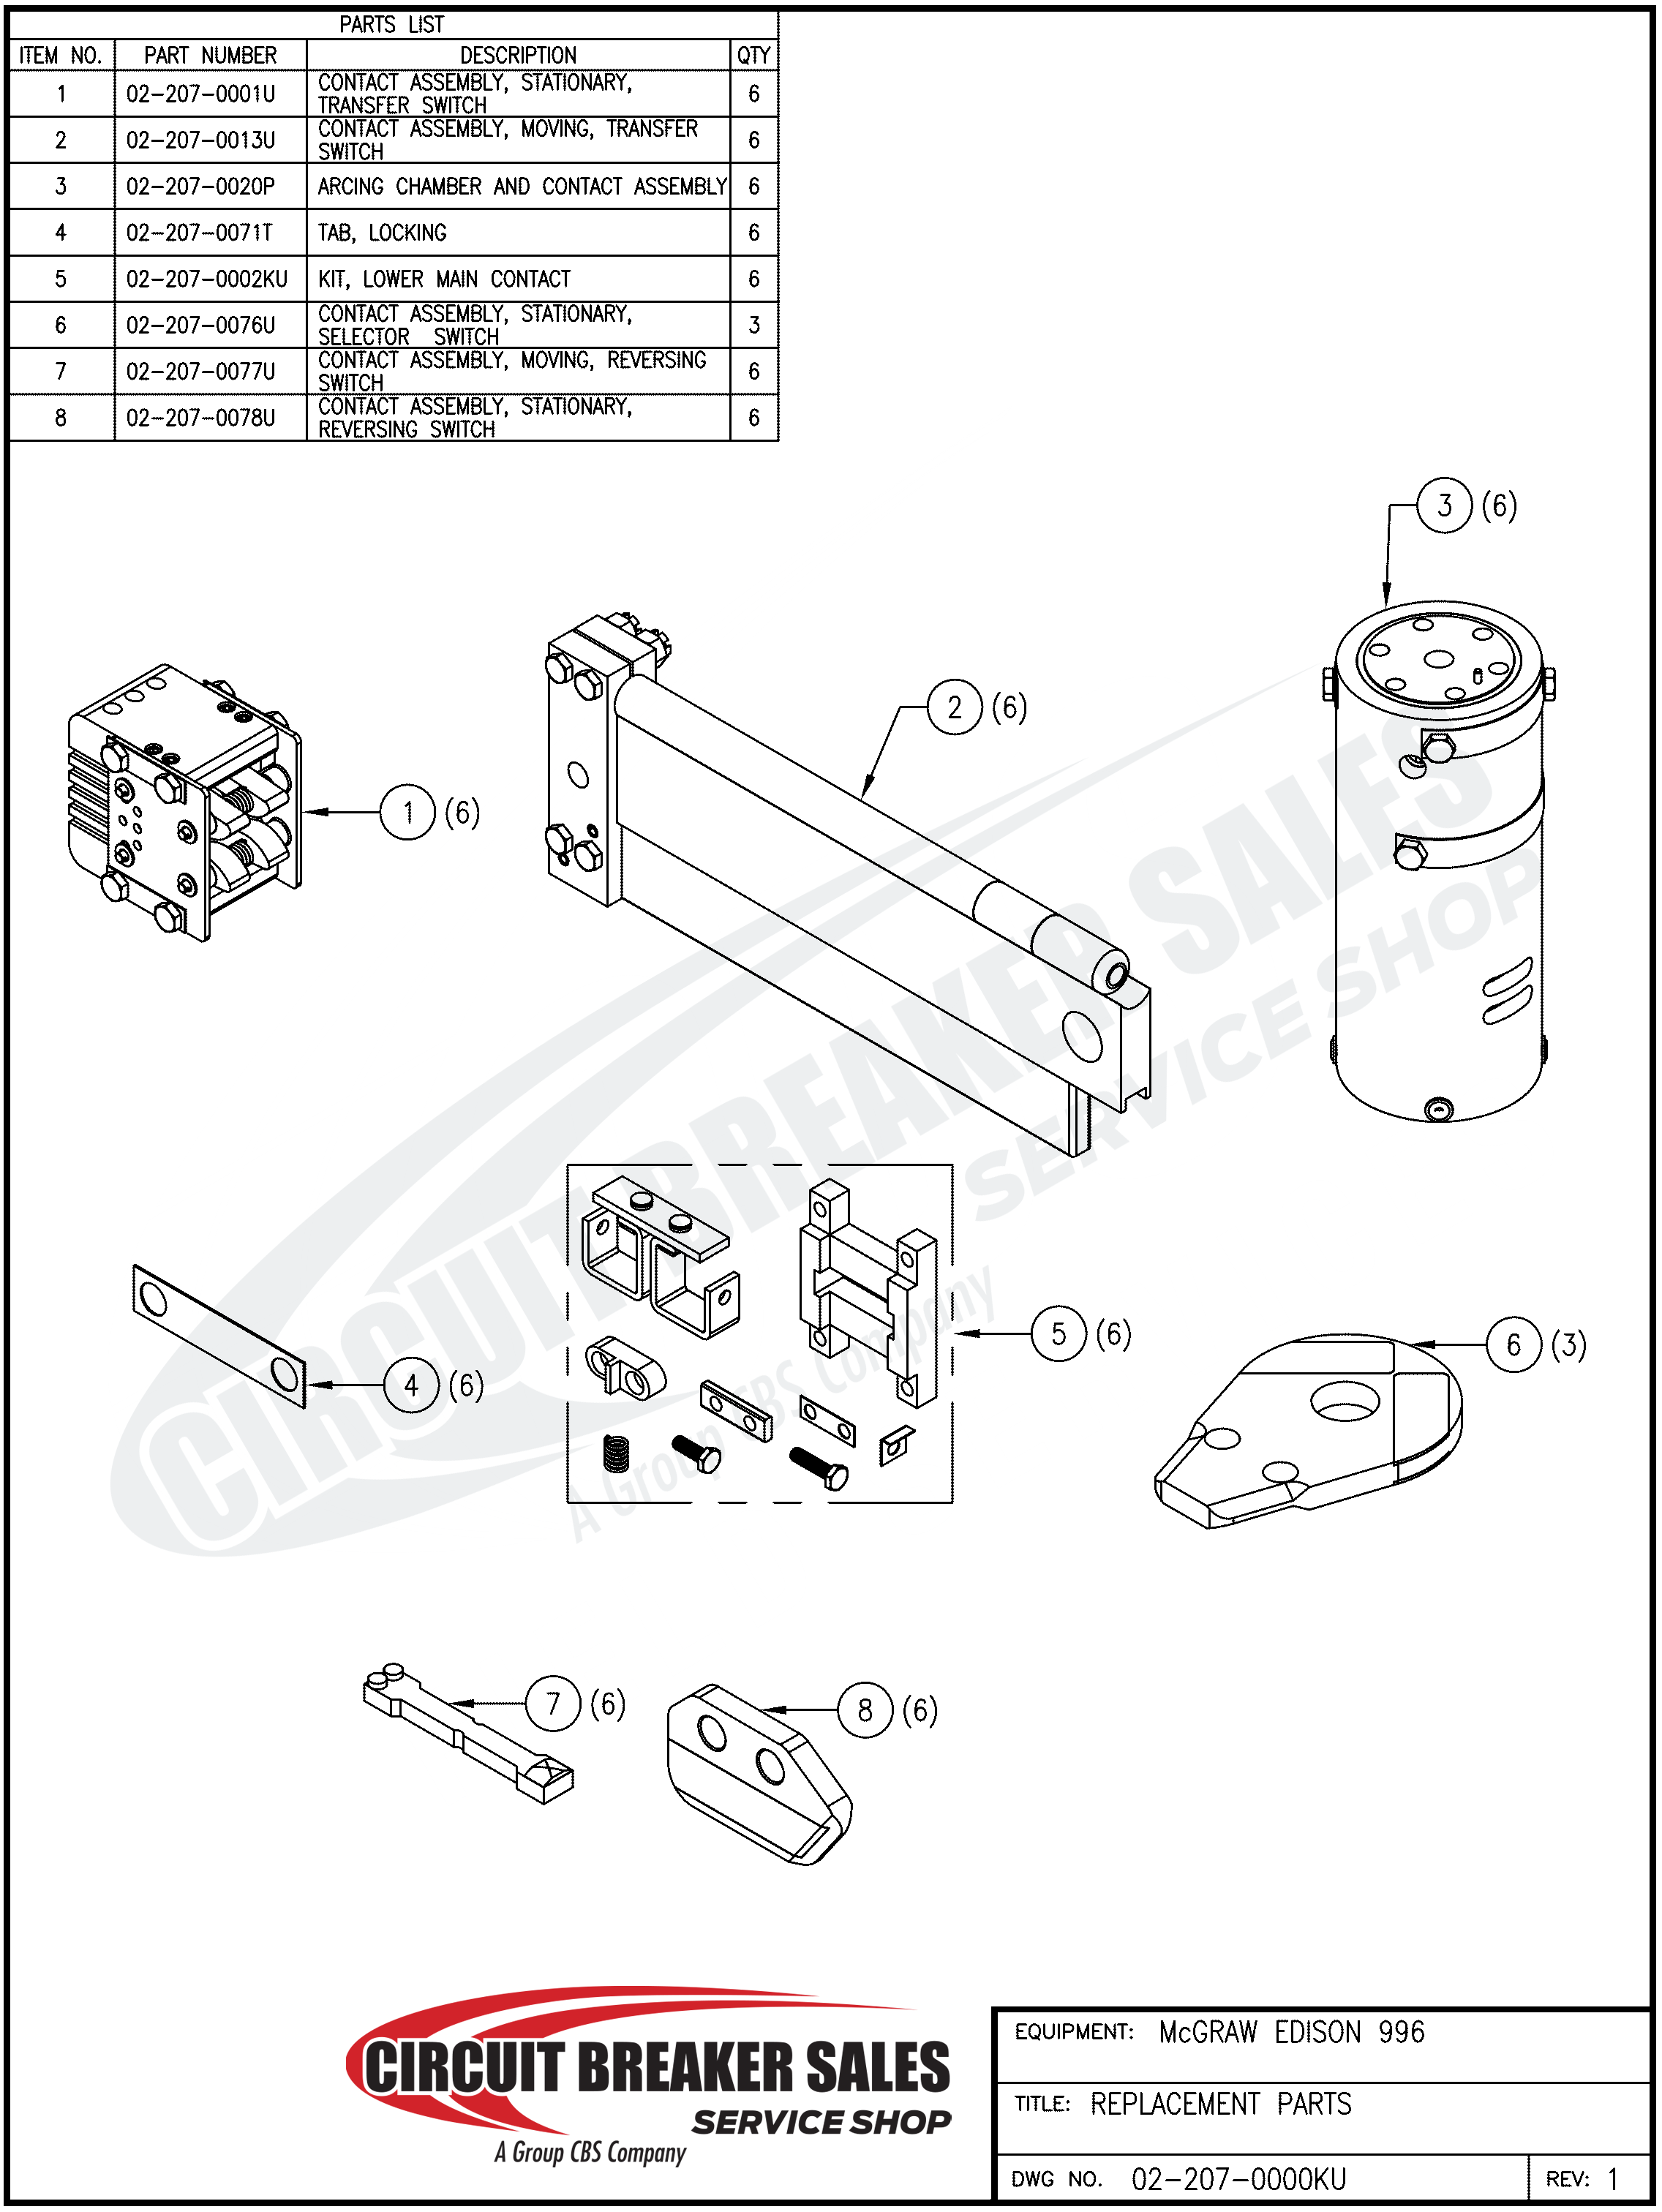 McGraw Edison 996 Series Kit - Replacement Parts